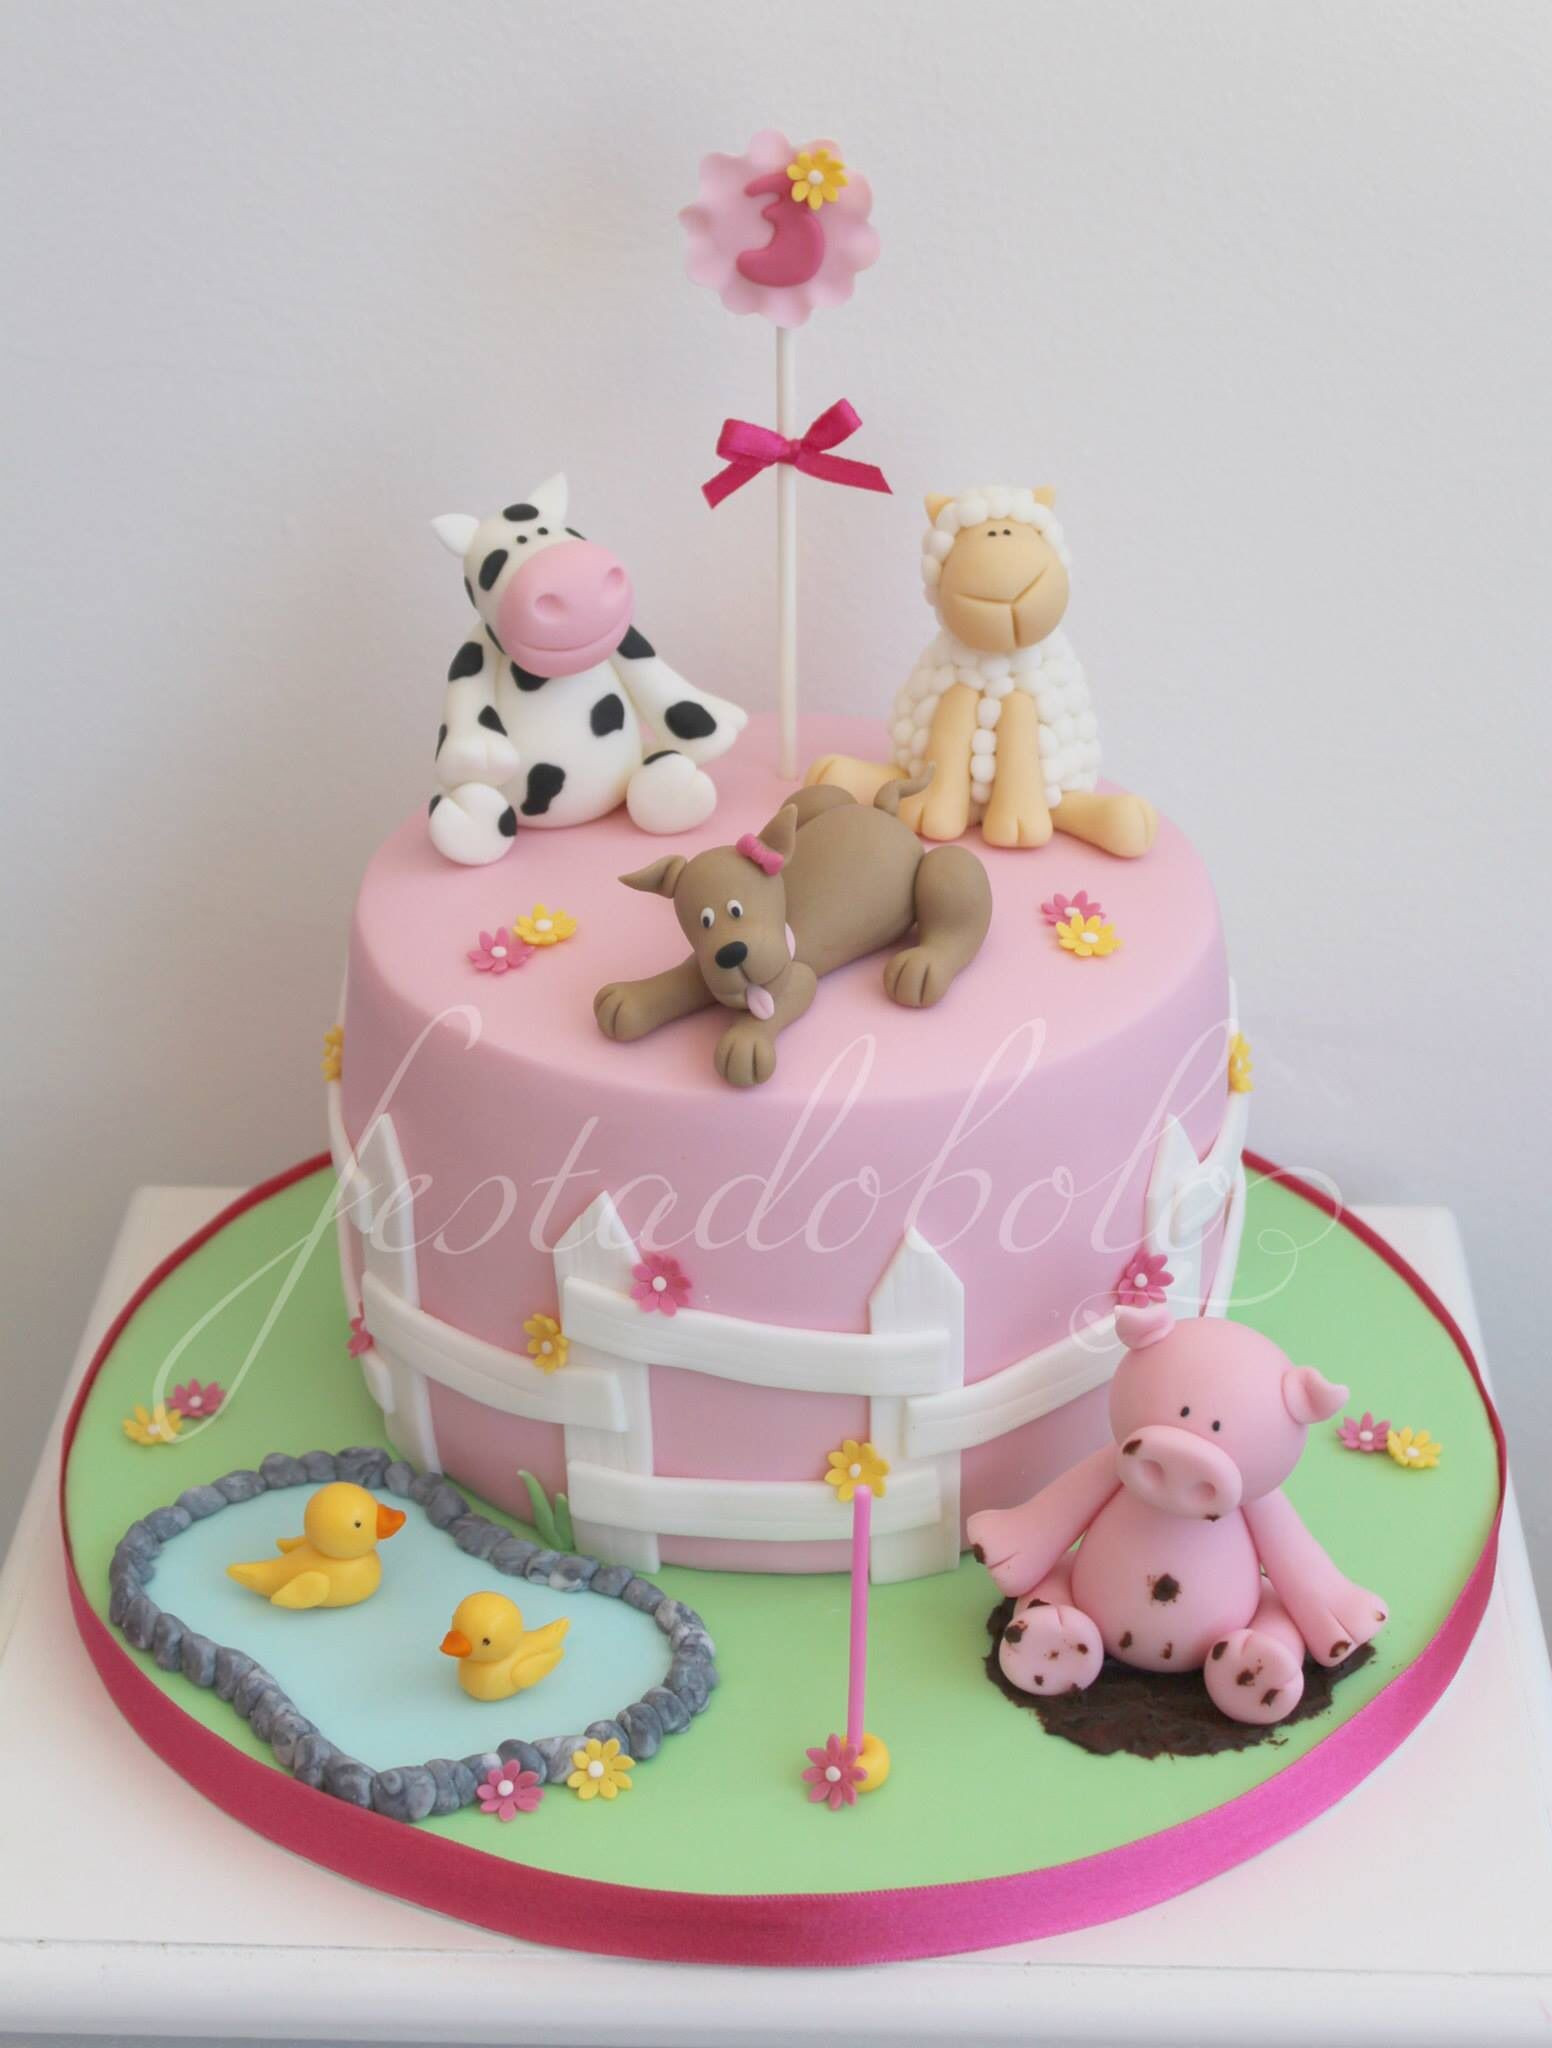 Farm Animals Birthday Party Cupcakes